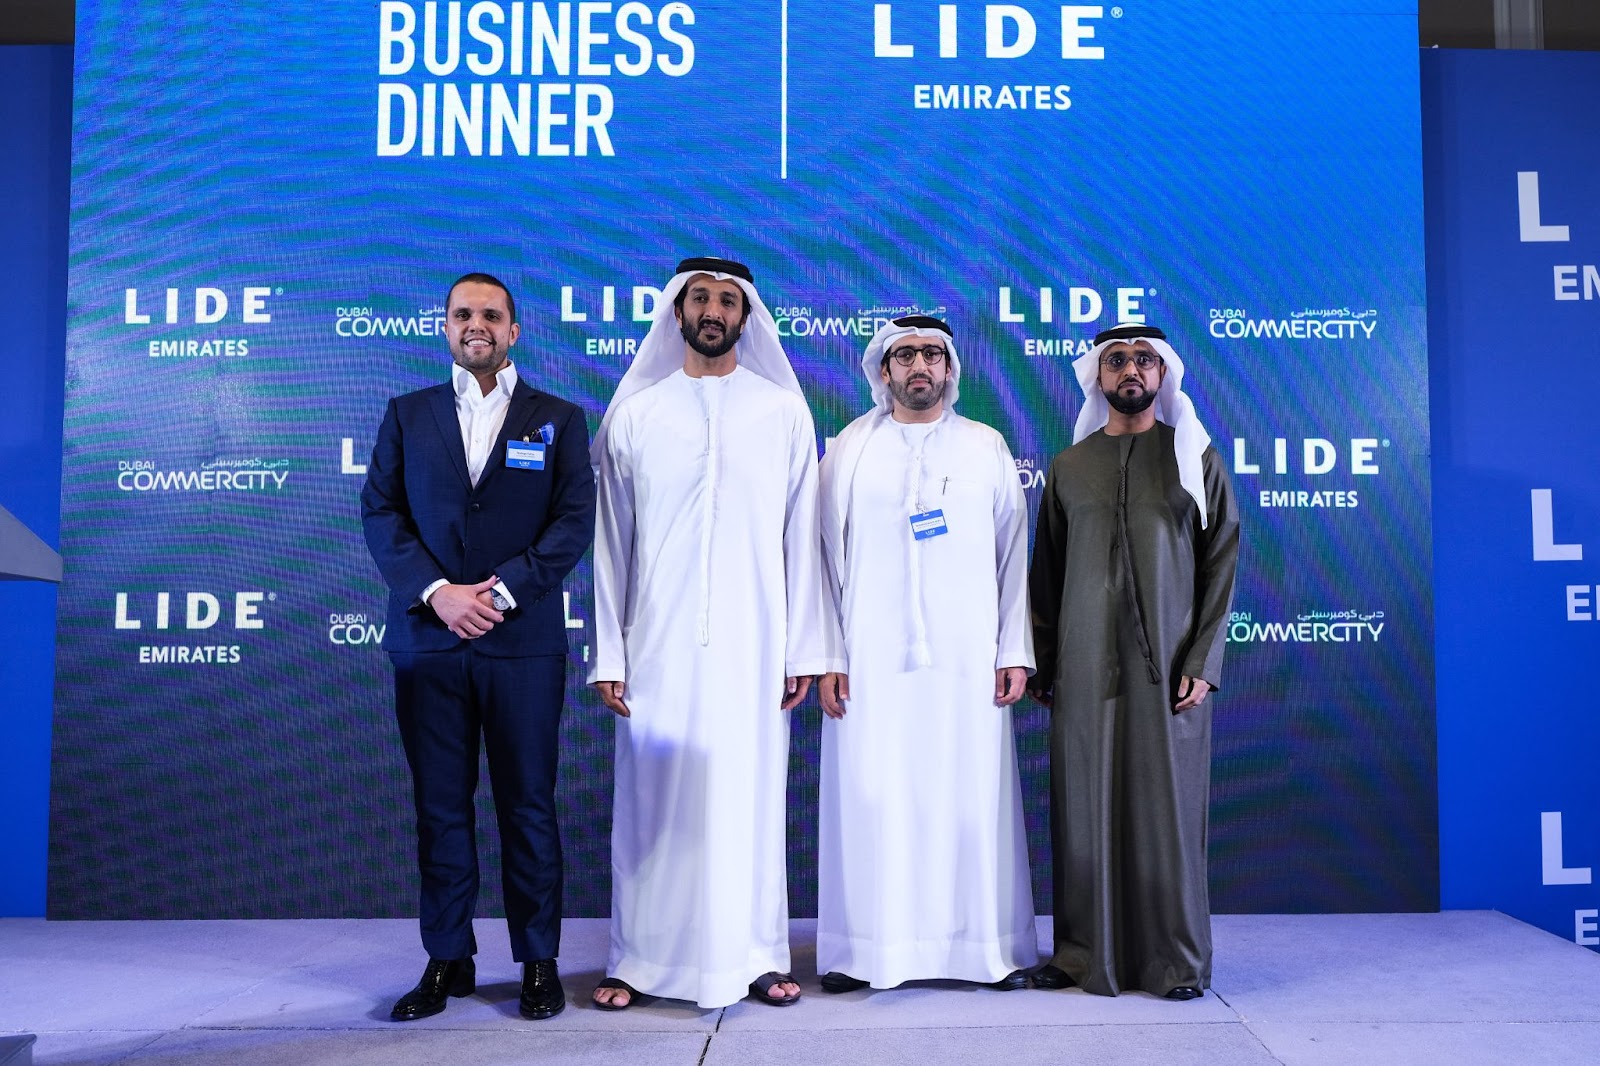 Last meeting of the LIDE Emirates group members in Dubai